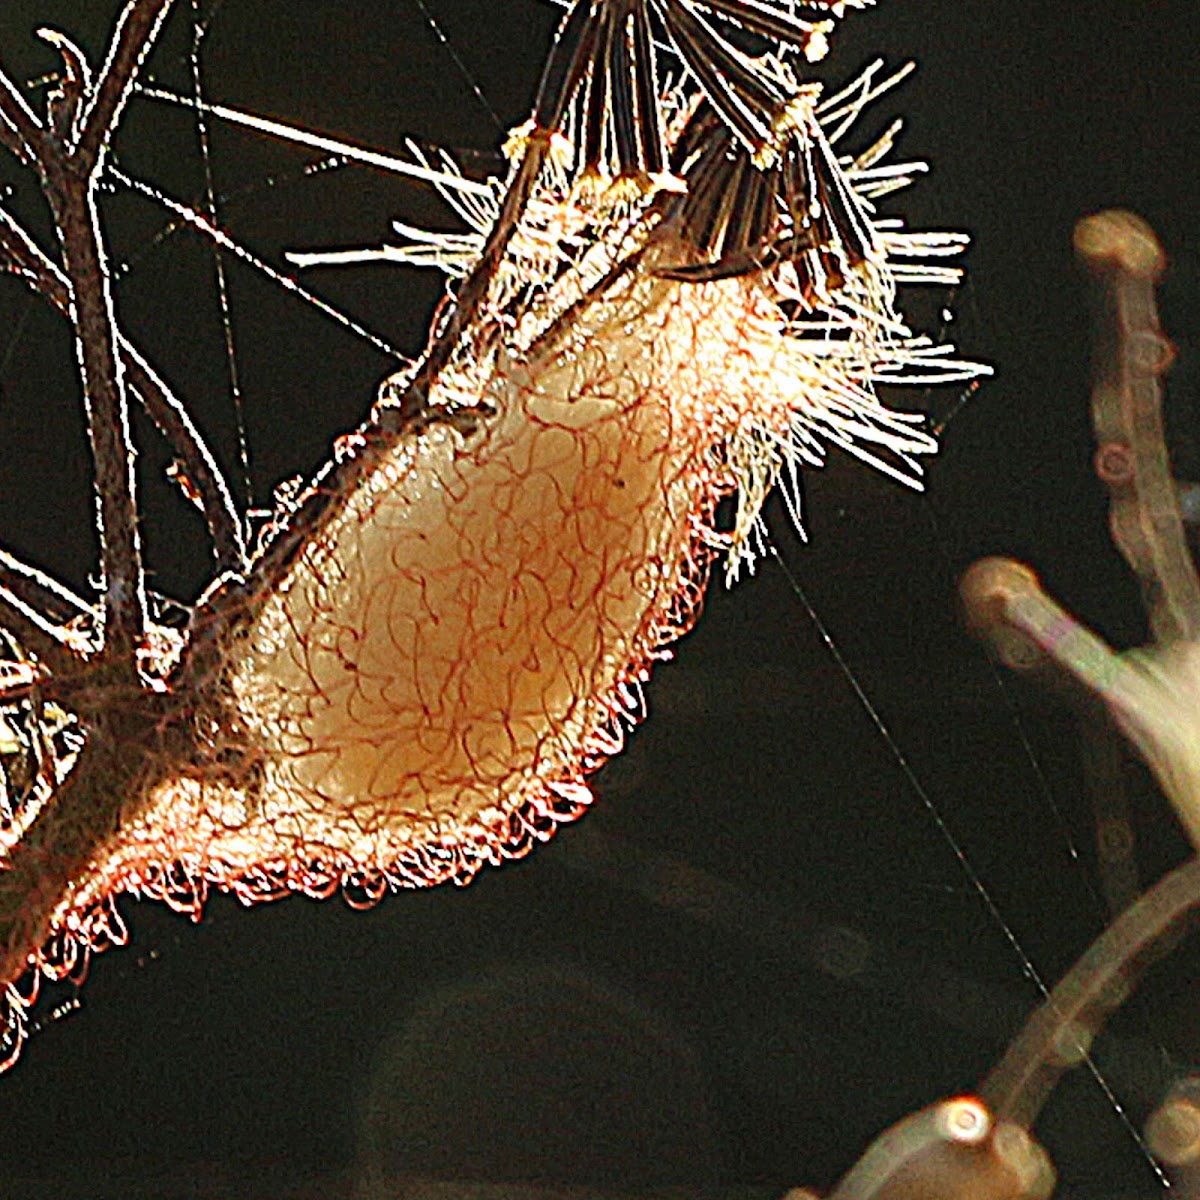 Tree Stump Spider with Egg Sac